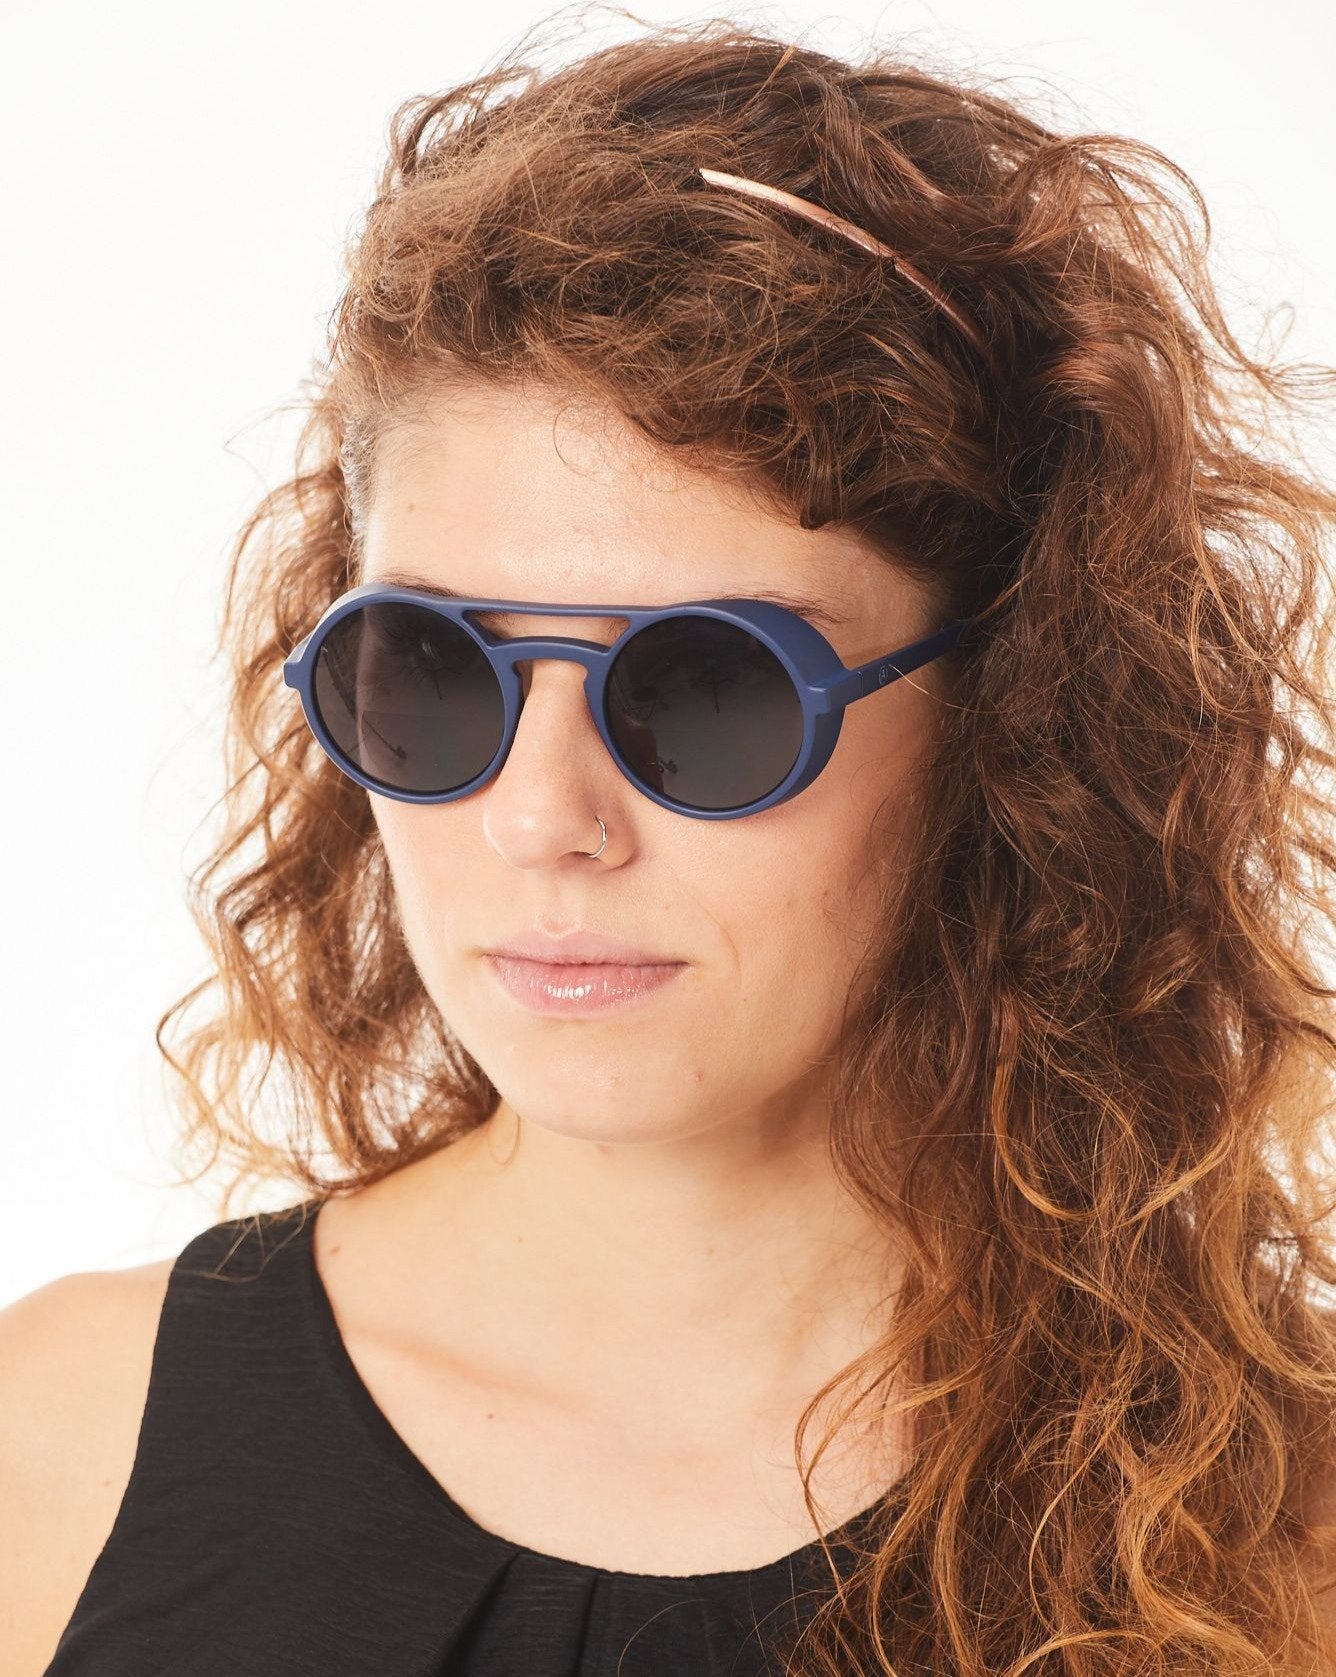 Aptica Polar Panto Cygnus Sunglasses Unisex Polarised Sun Lens Female Model